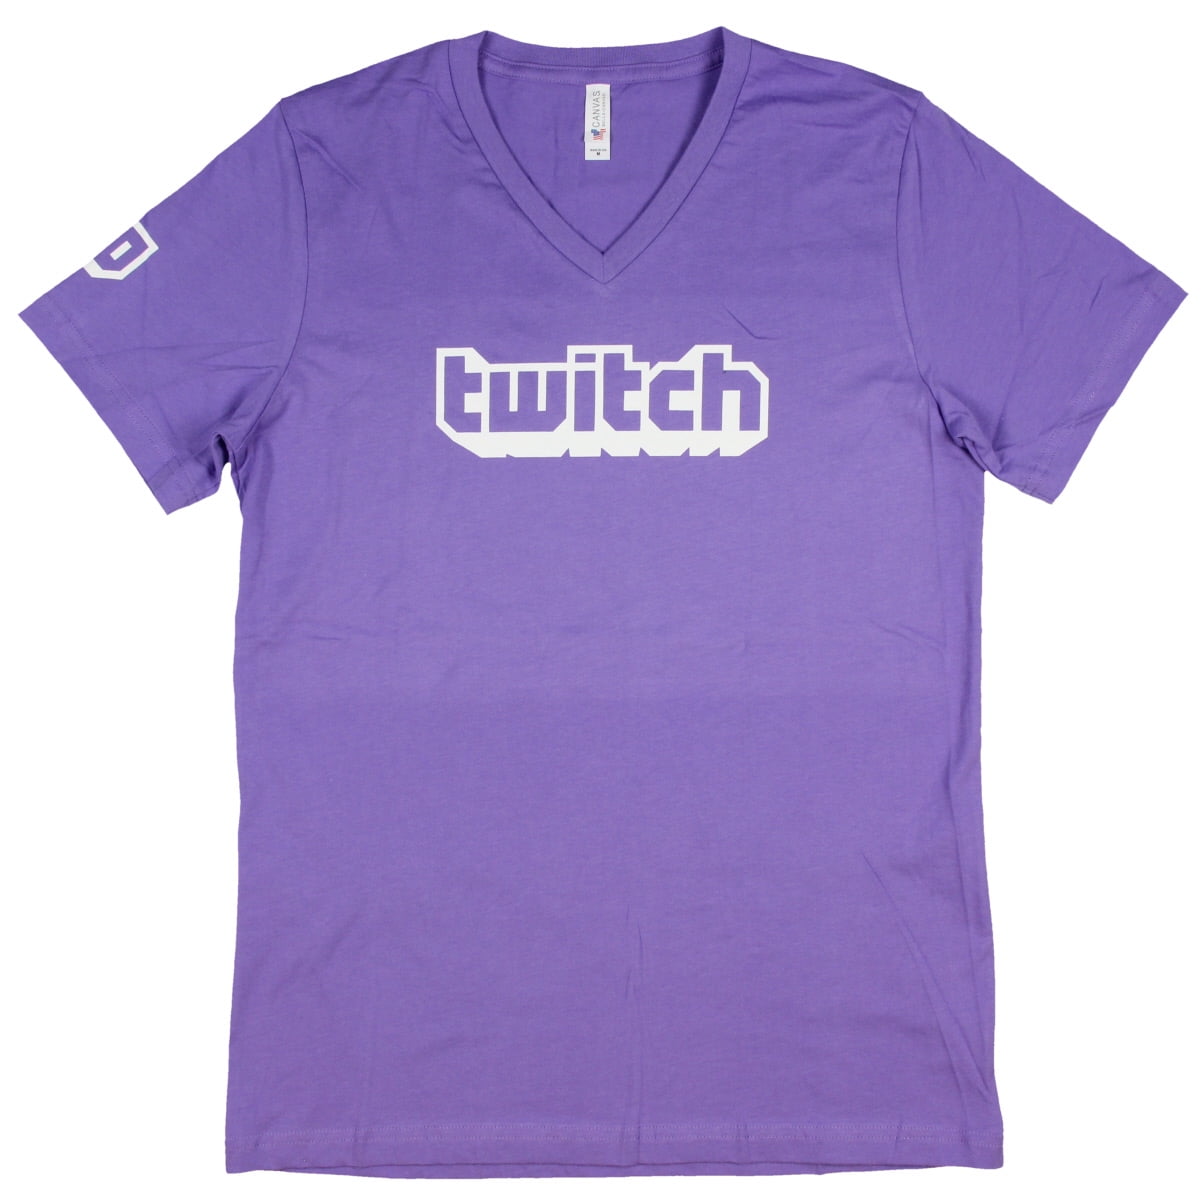 Twitch Shirt Men's Glitch Logo Short 